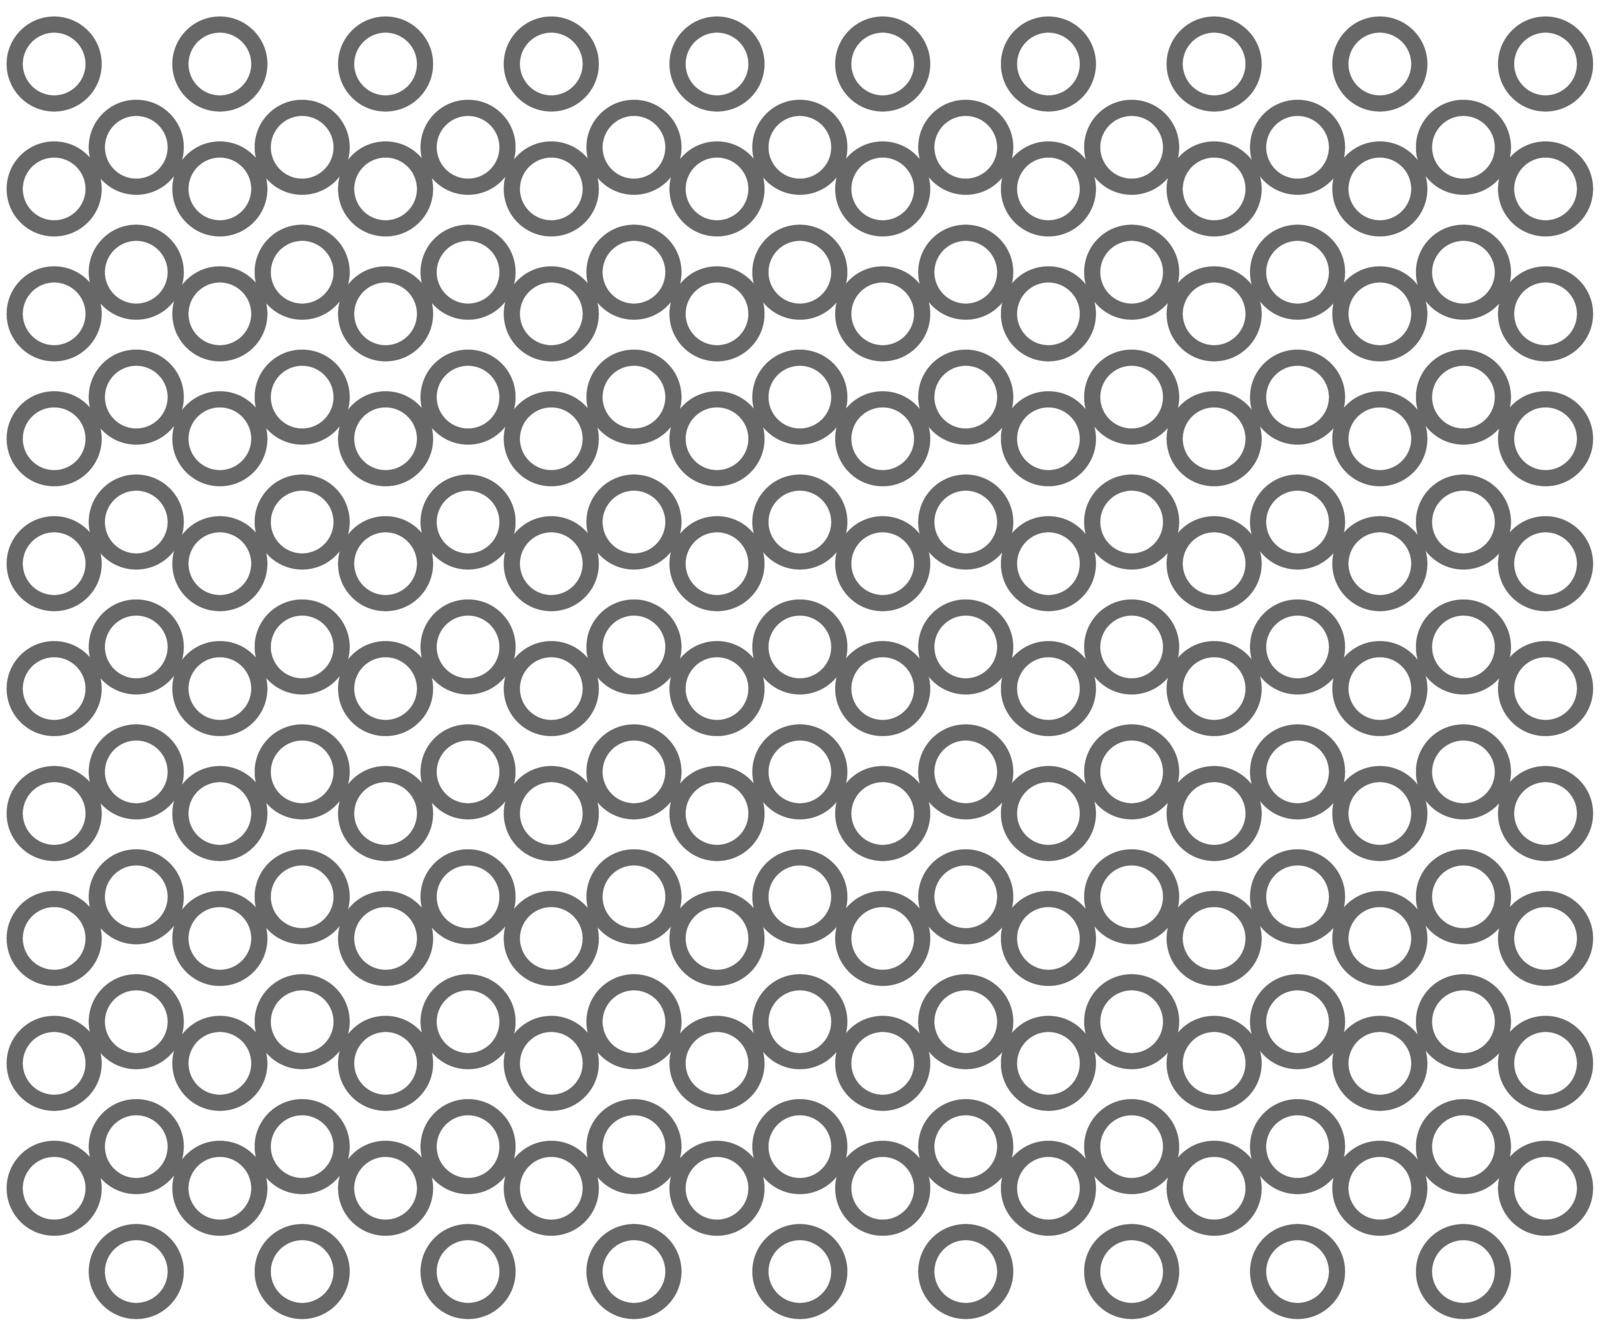 Black and white polka dot pattern. polka dot wave vector by Rodseng